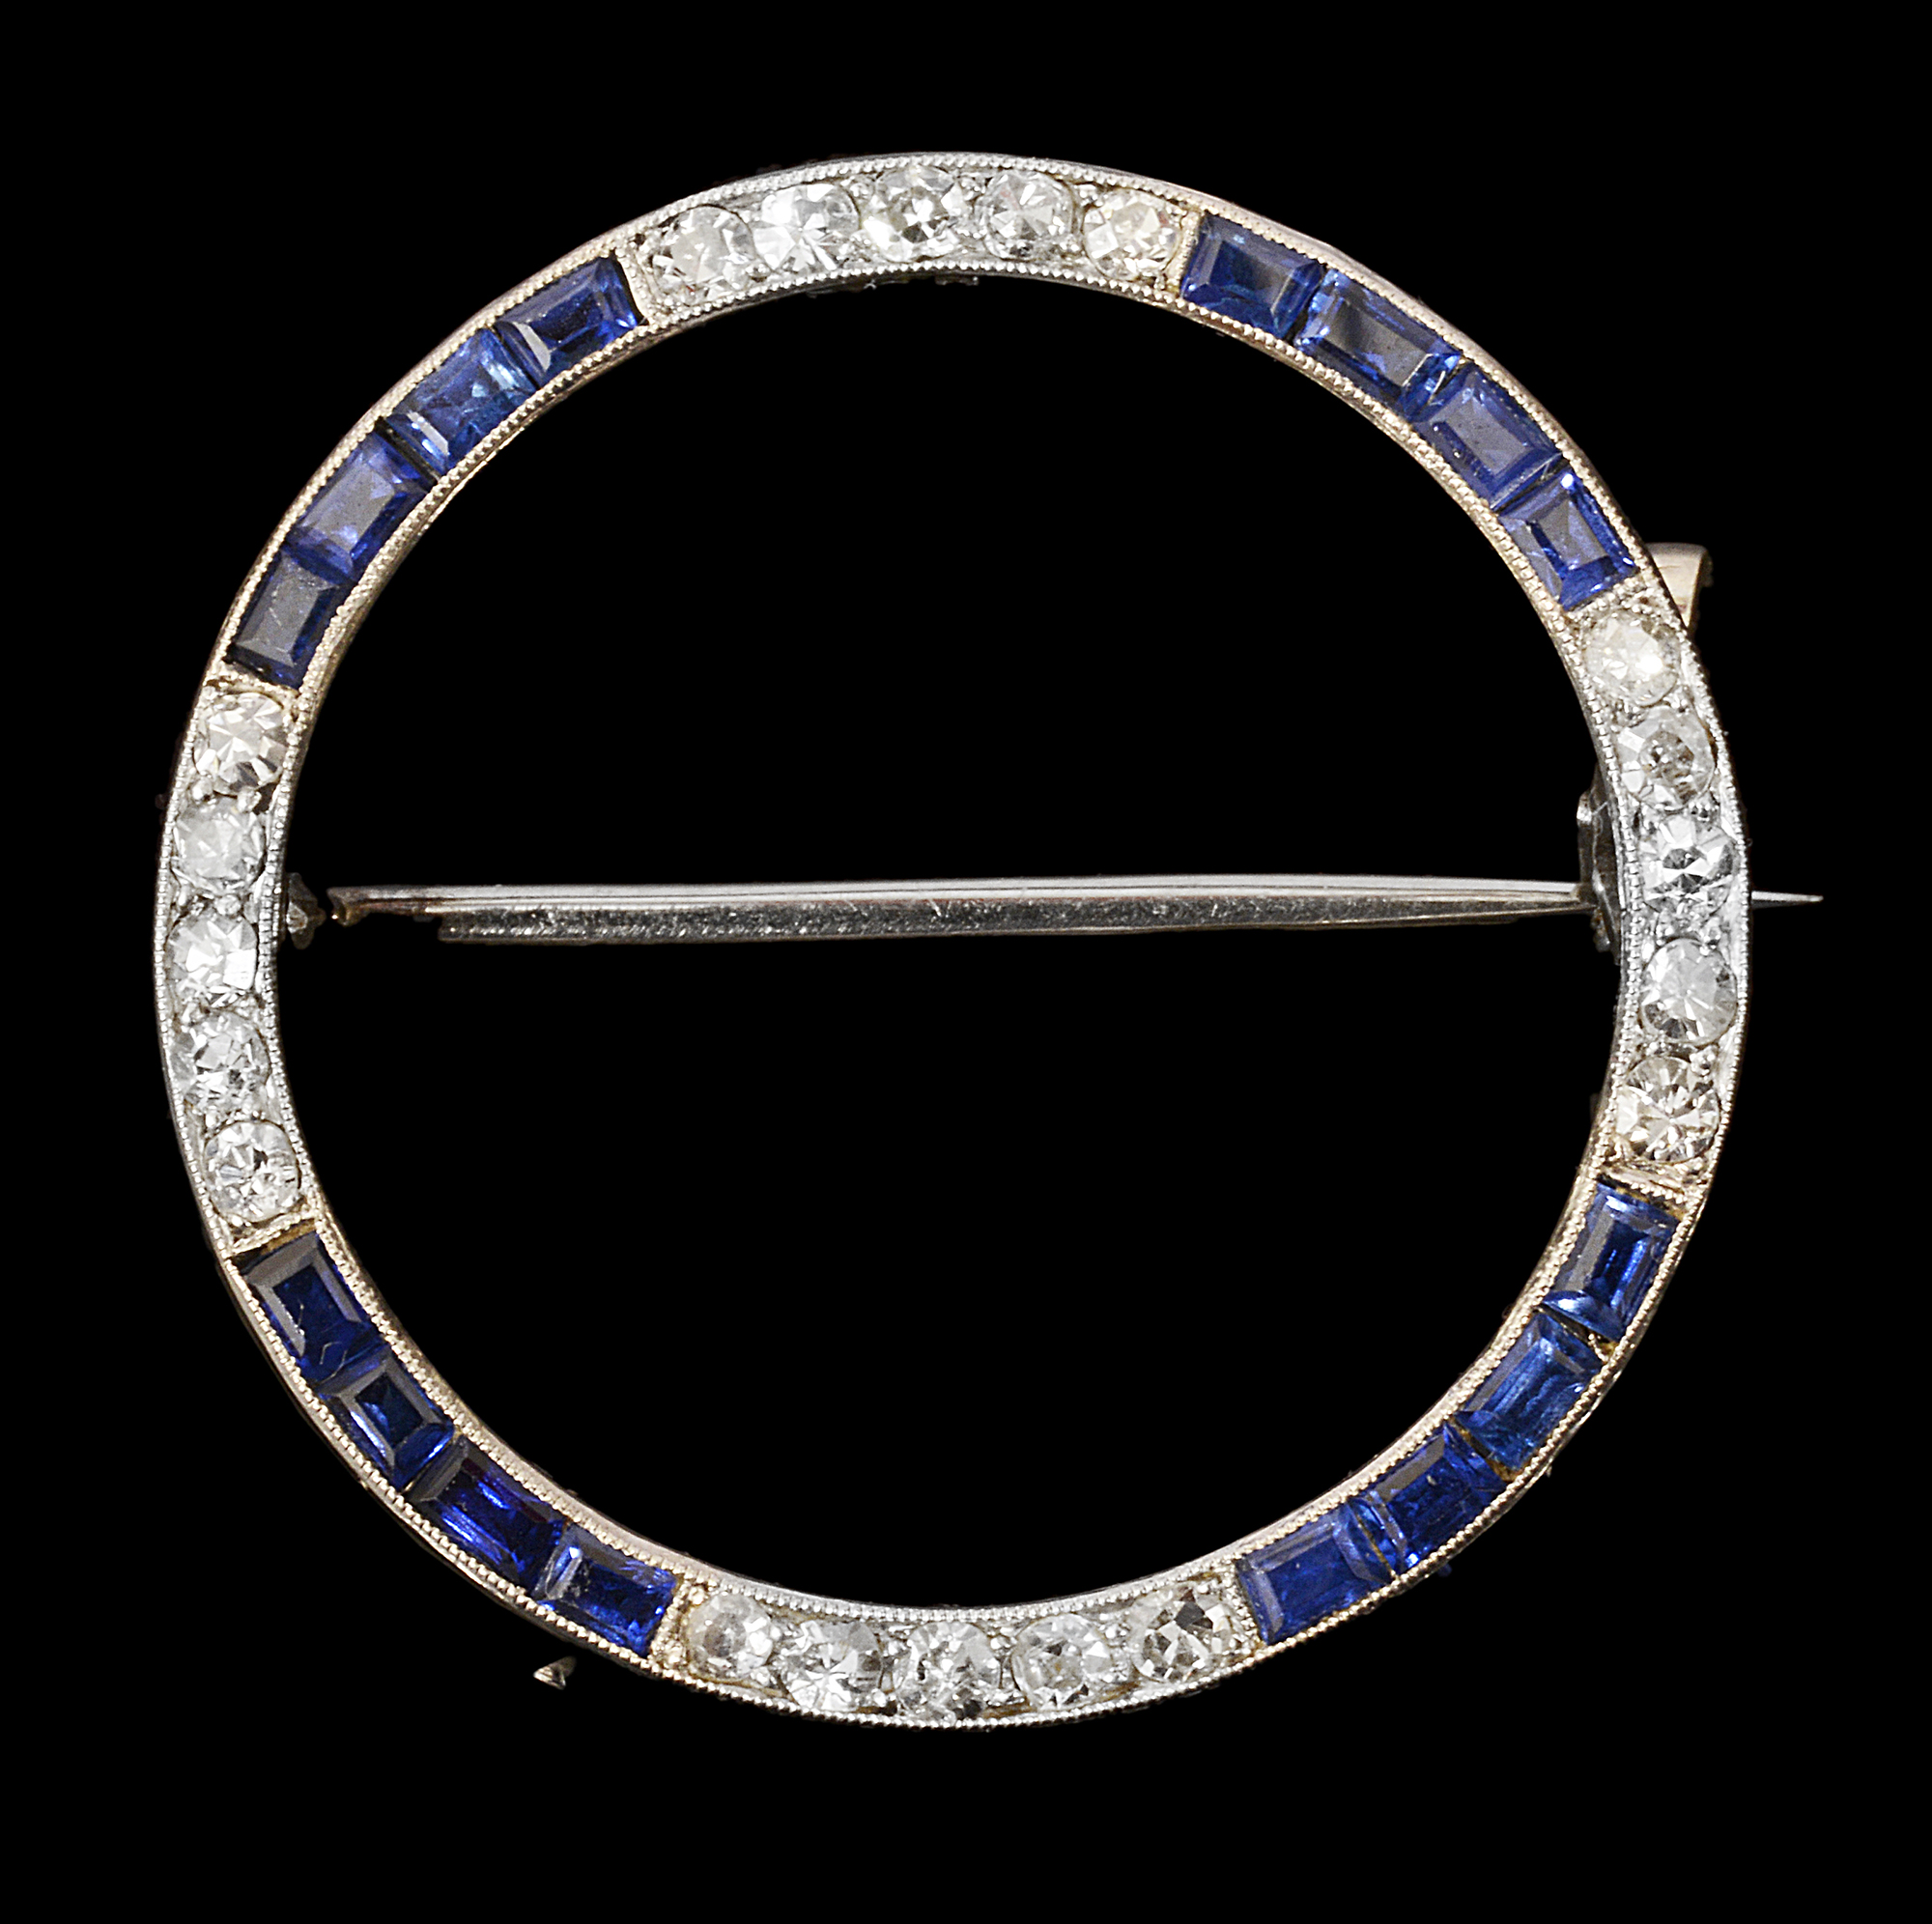 An Art Deco sapphire and diamond-set brooch